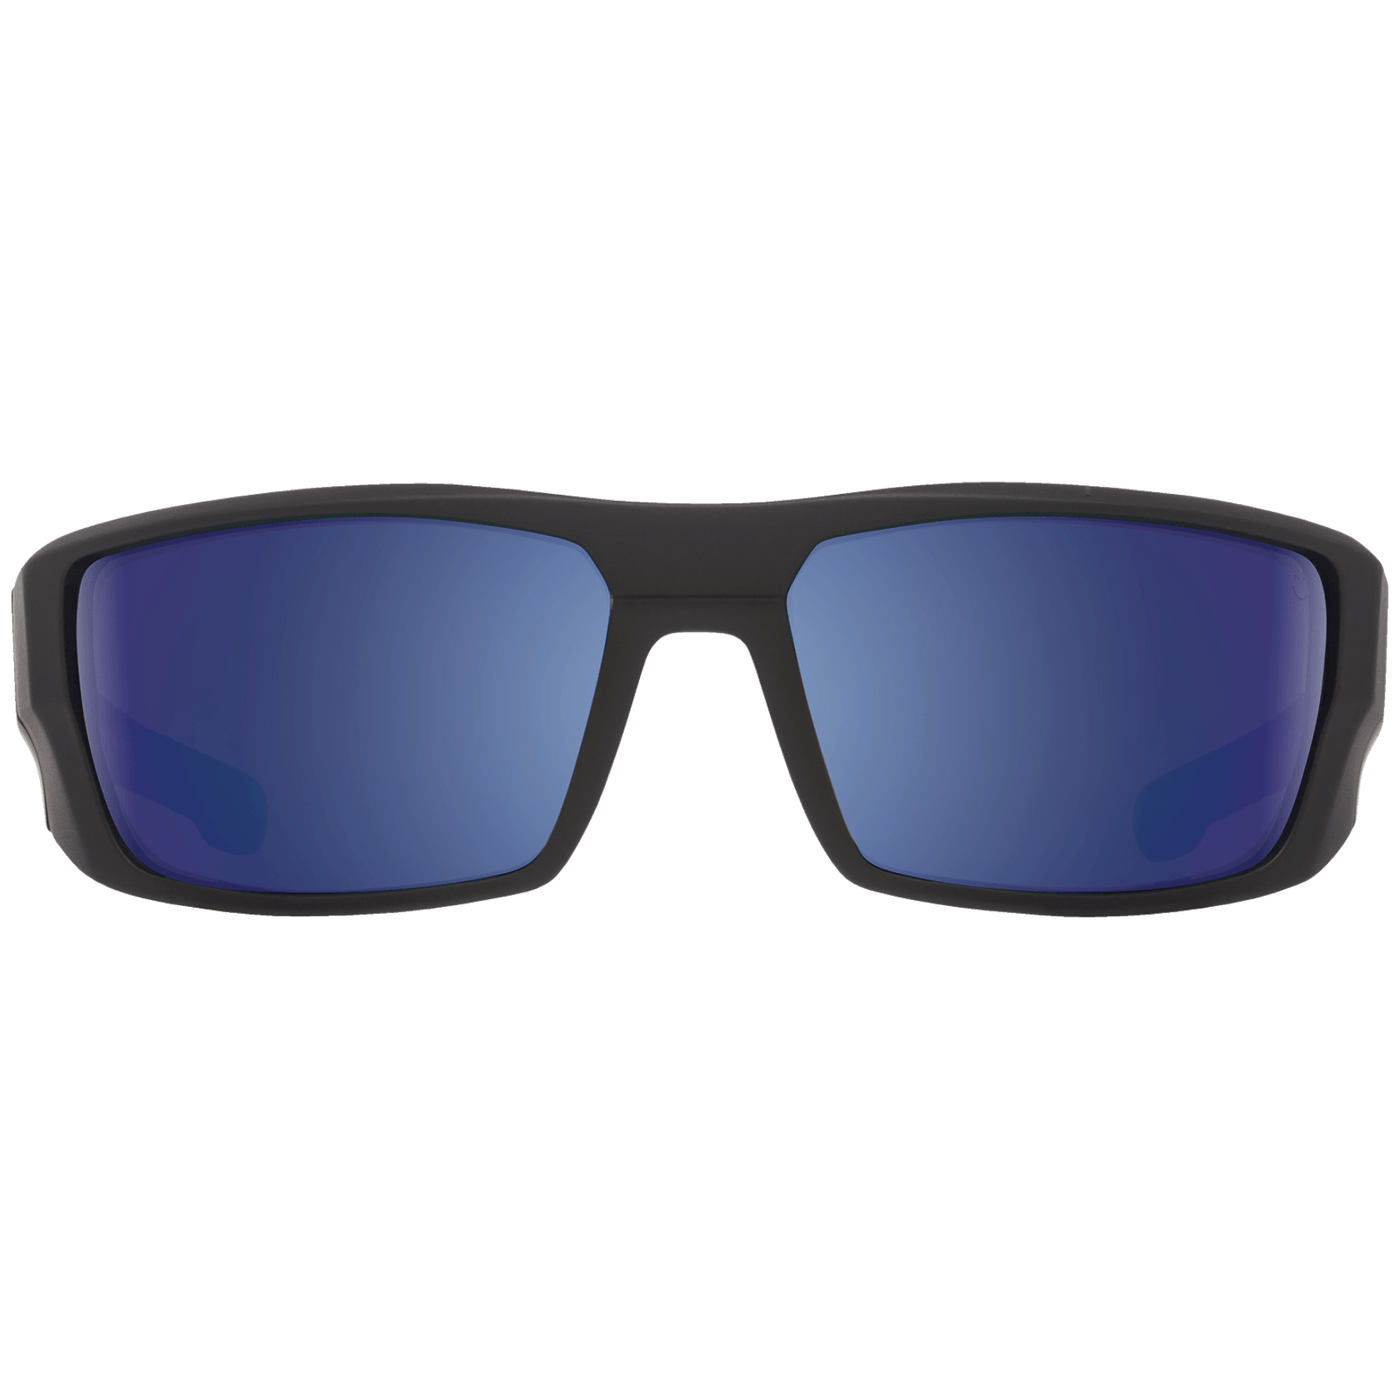 SPY DIRK Polarized Sunglasses, Happy Lens - Blue 8Lines Shop - Fast Shipping